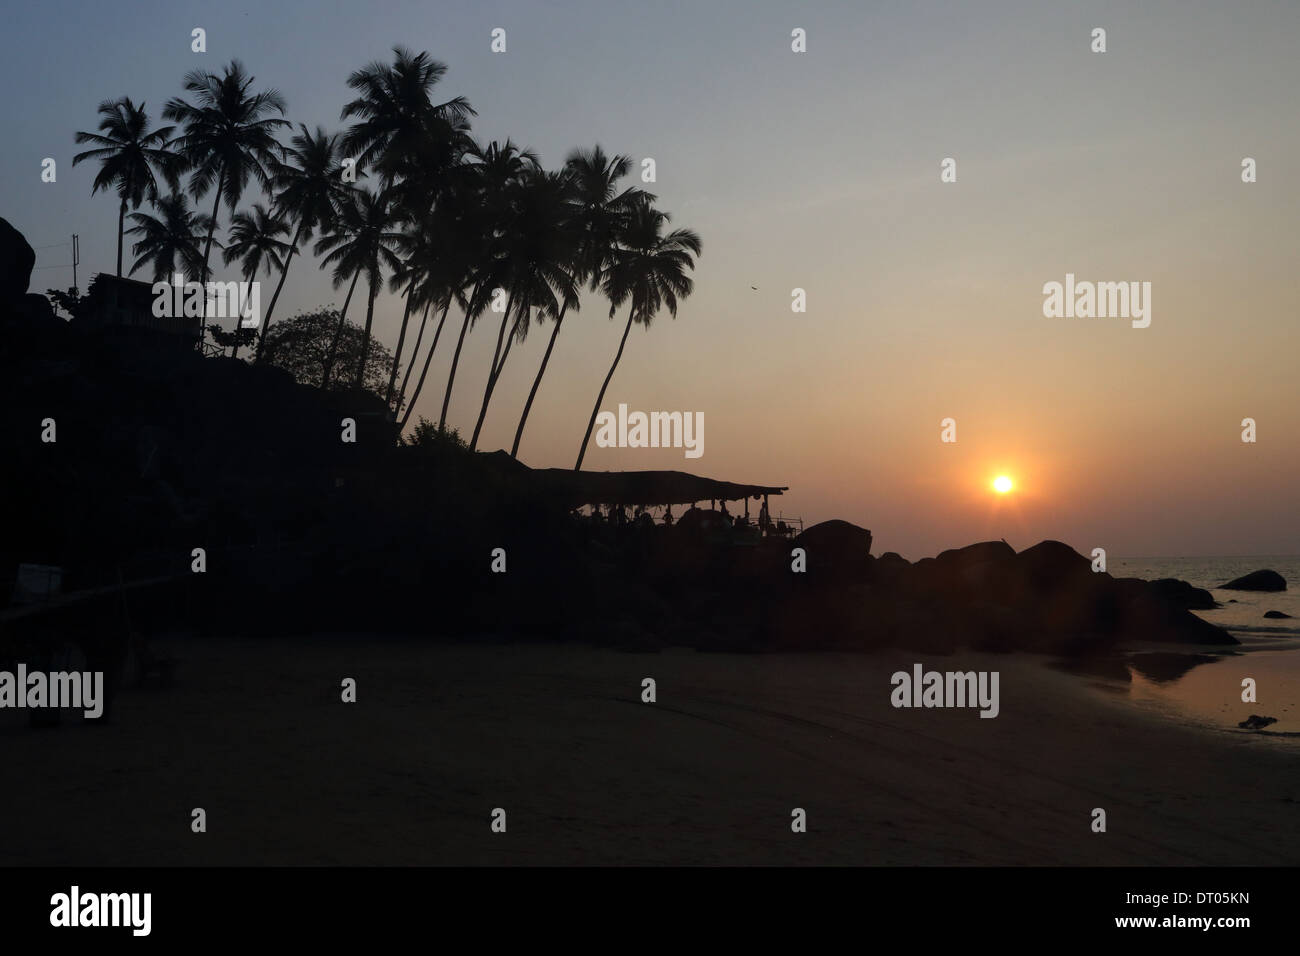 Palolem beach in Goa, India, South India  Photo: pixstory / Alamy Stock Photo